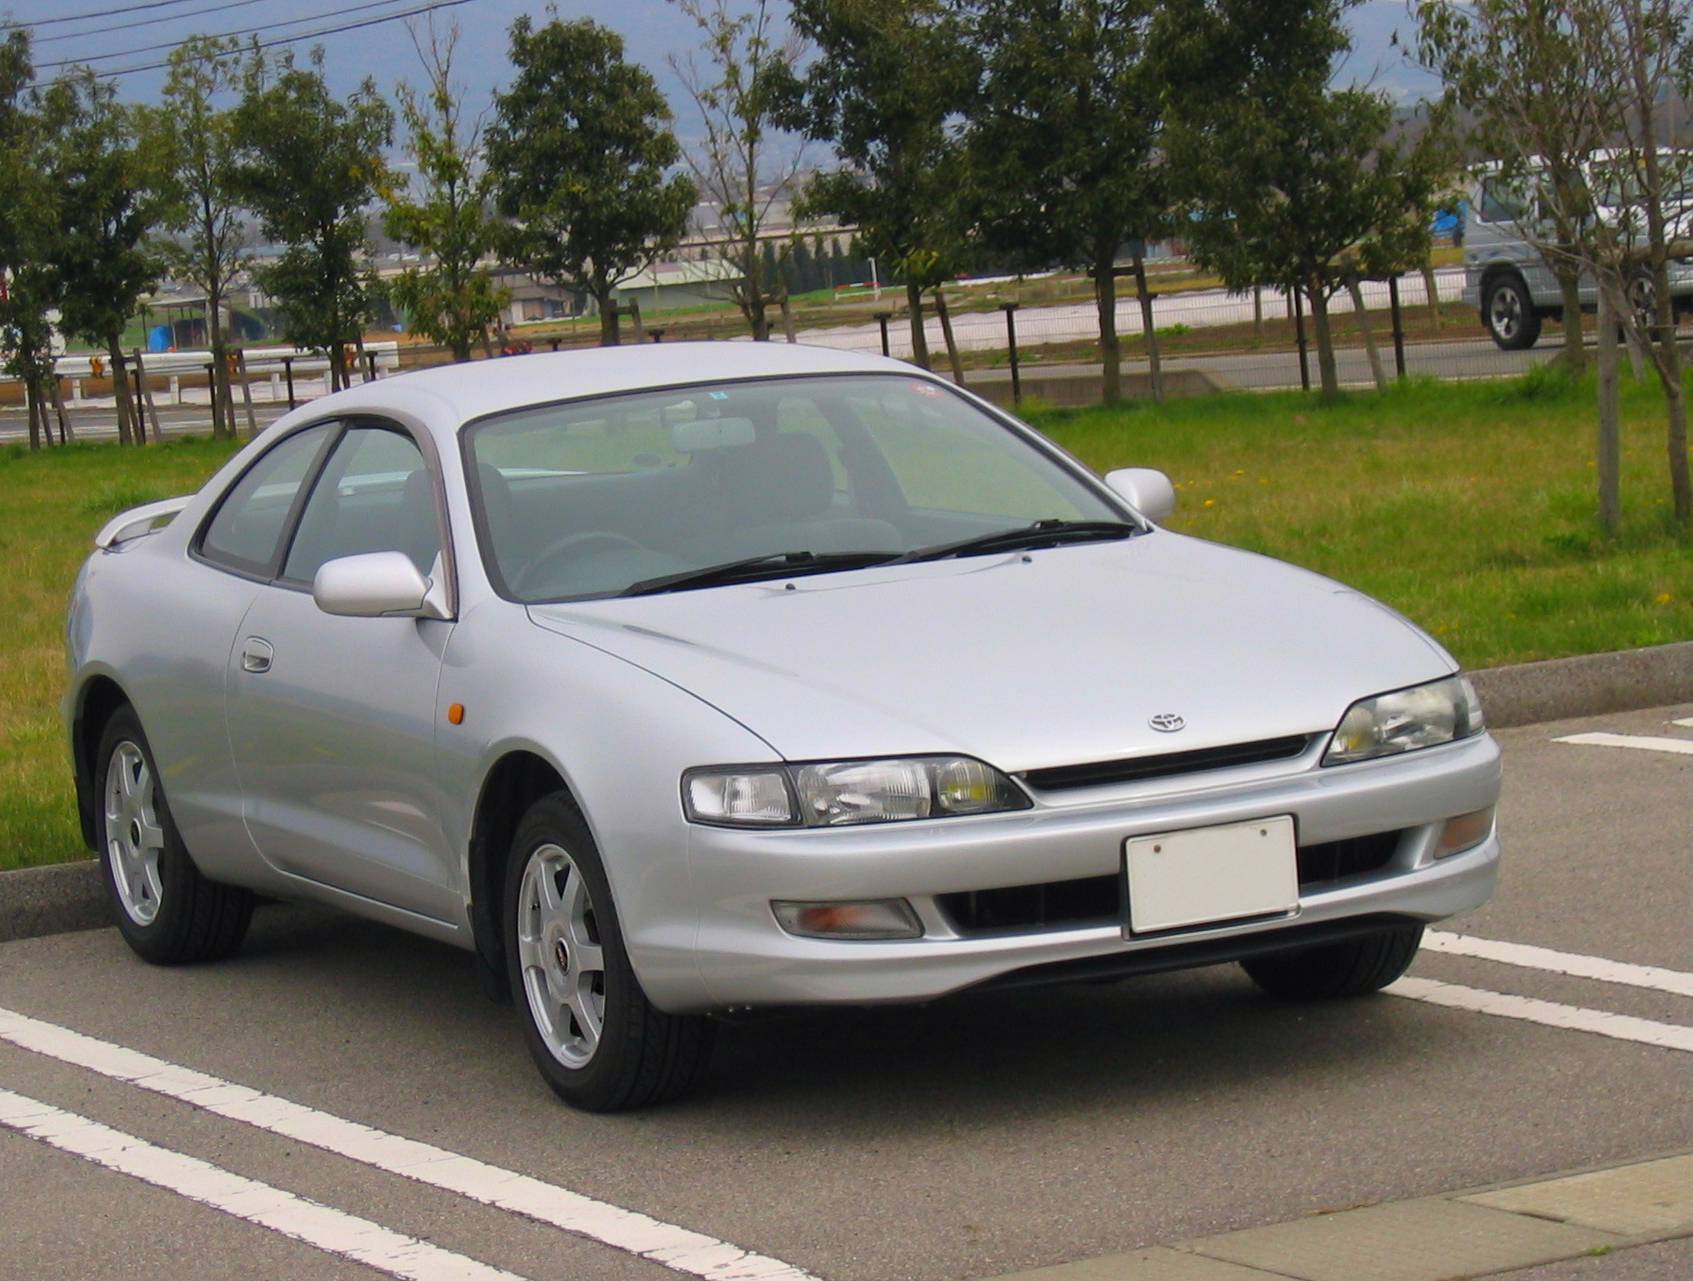 File:Toyota Curren ST-206 1996 parking.jpg